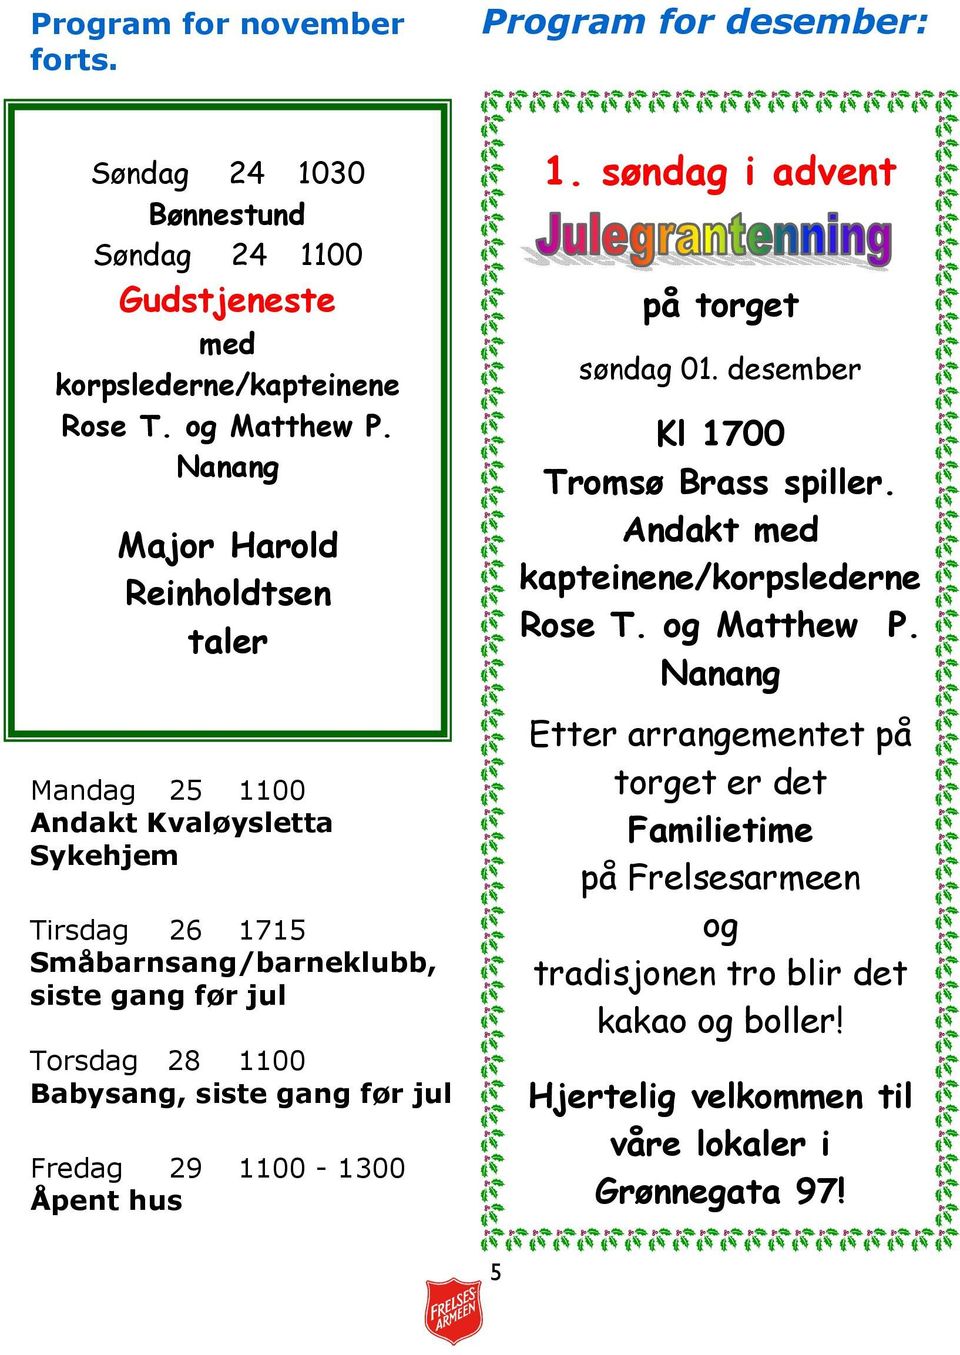 Babysang, siste gang før jul Fredag 29 1100-1300 1. søndag i advent på torget søndag 01. desember Kl 1700 Tromsø Brass spiller.